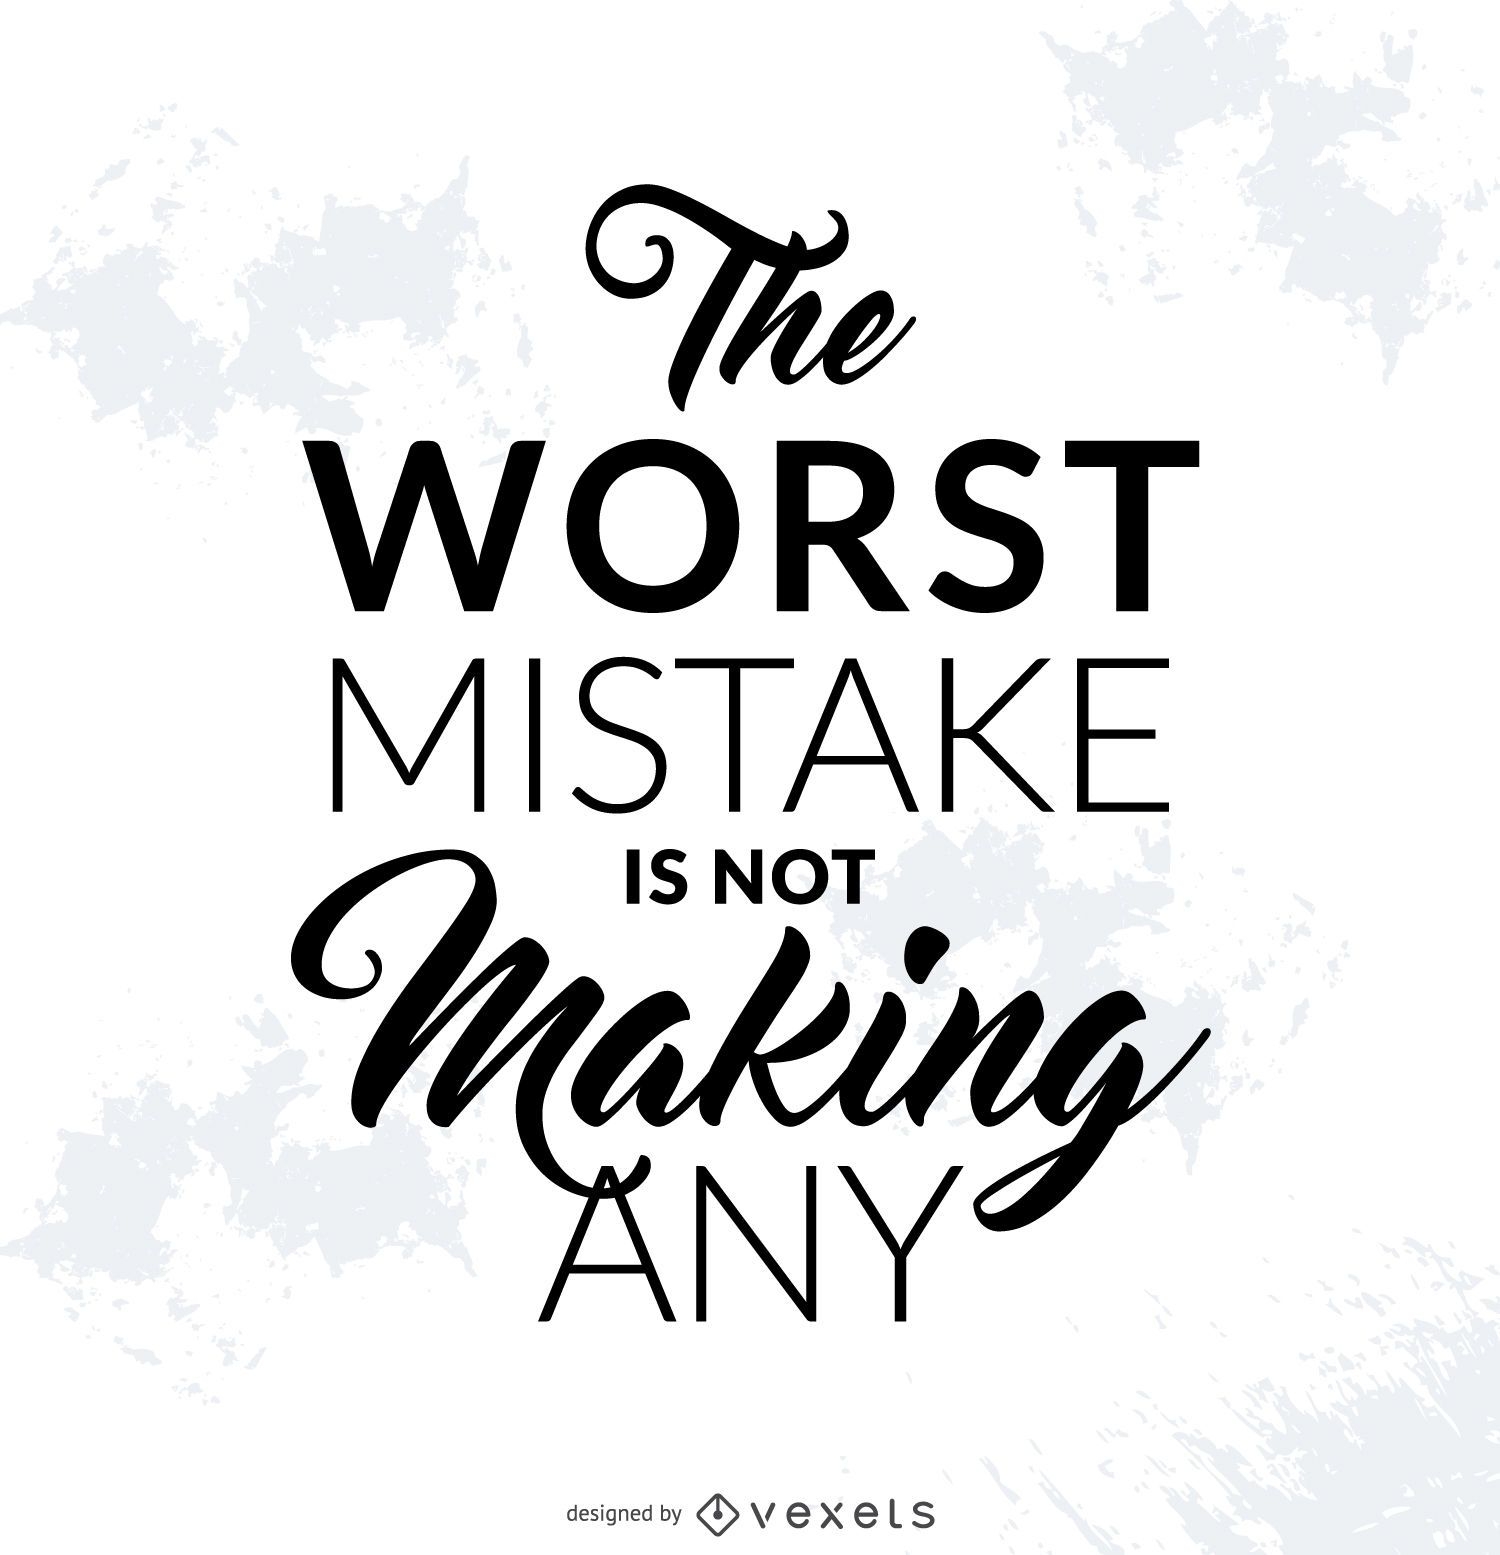 Motivational mistake poster